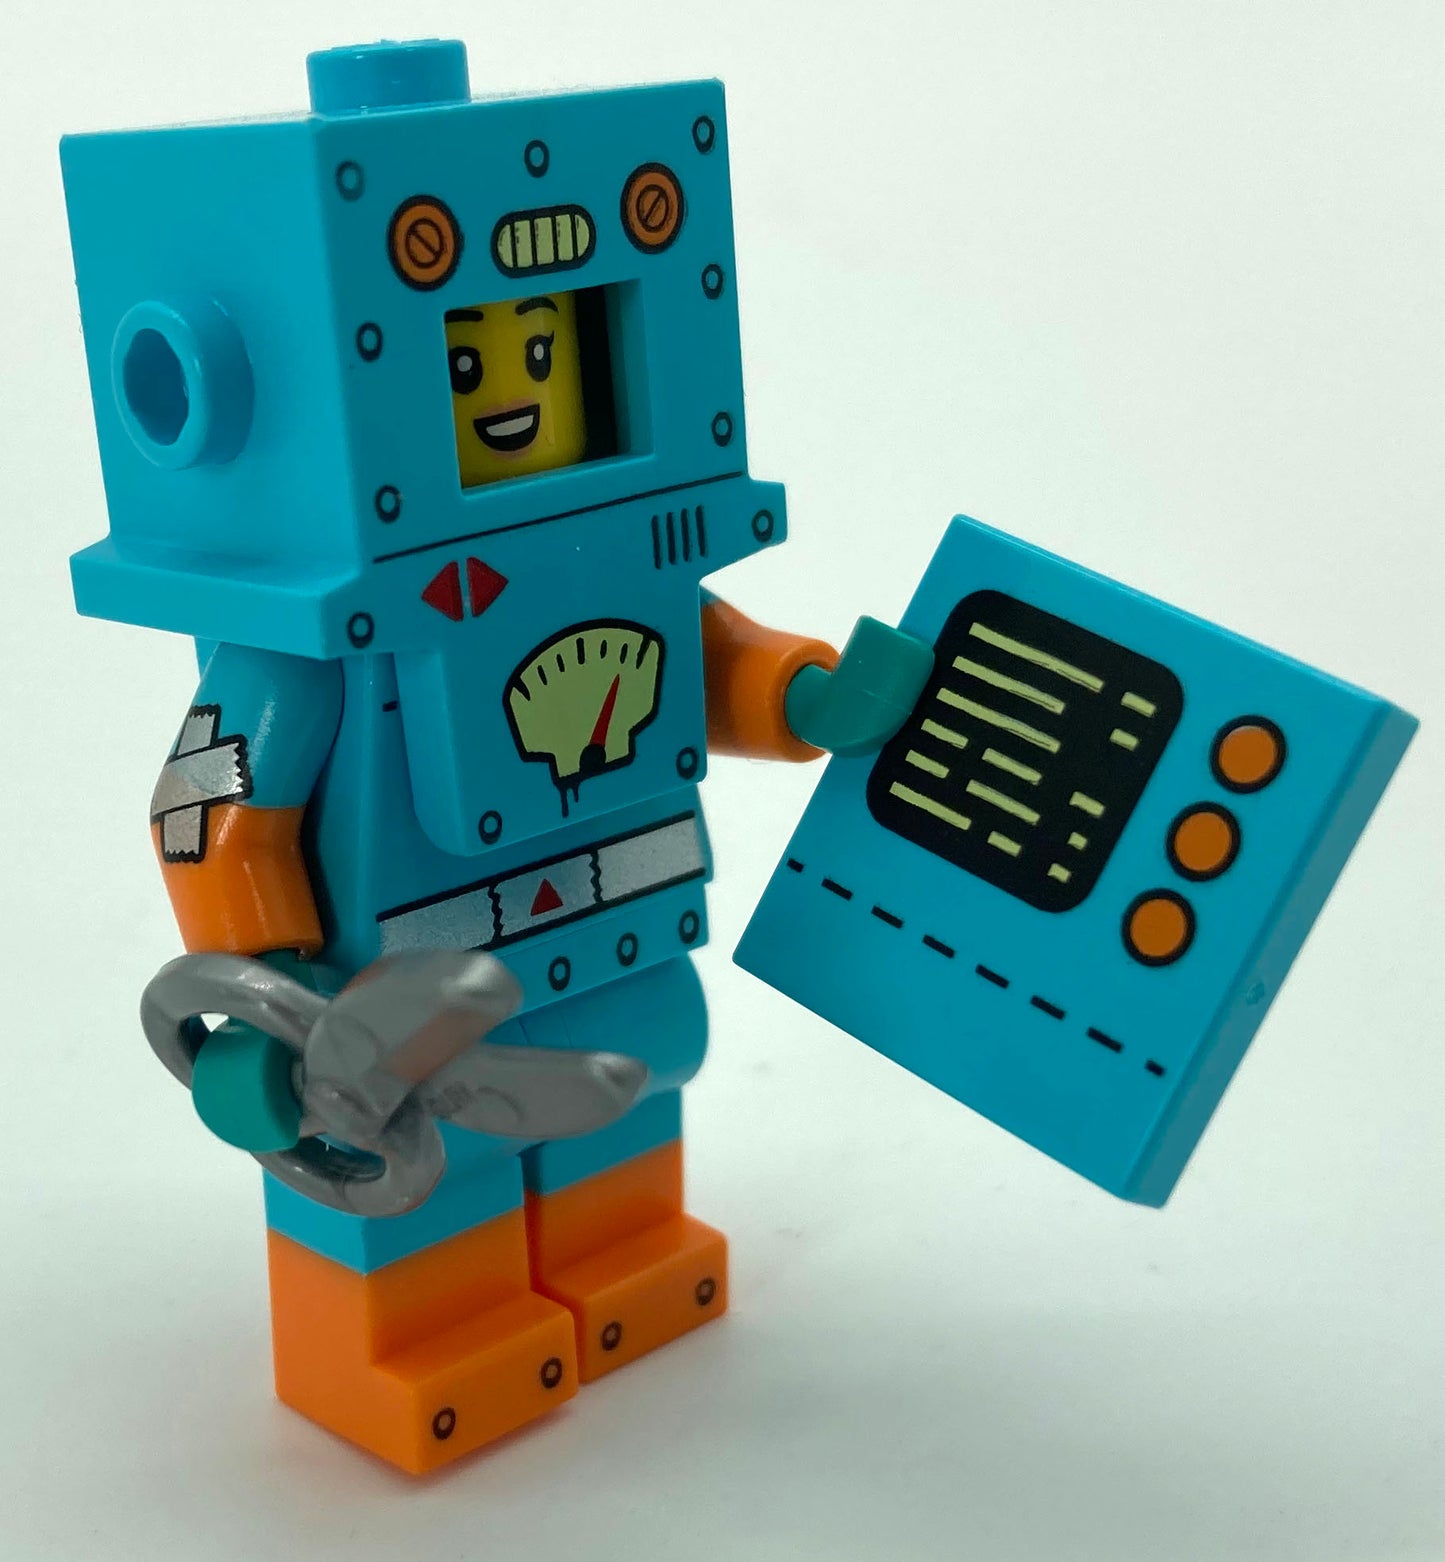 Series 23 - Cardboard Robot